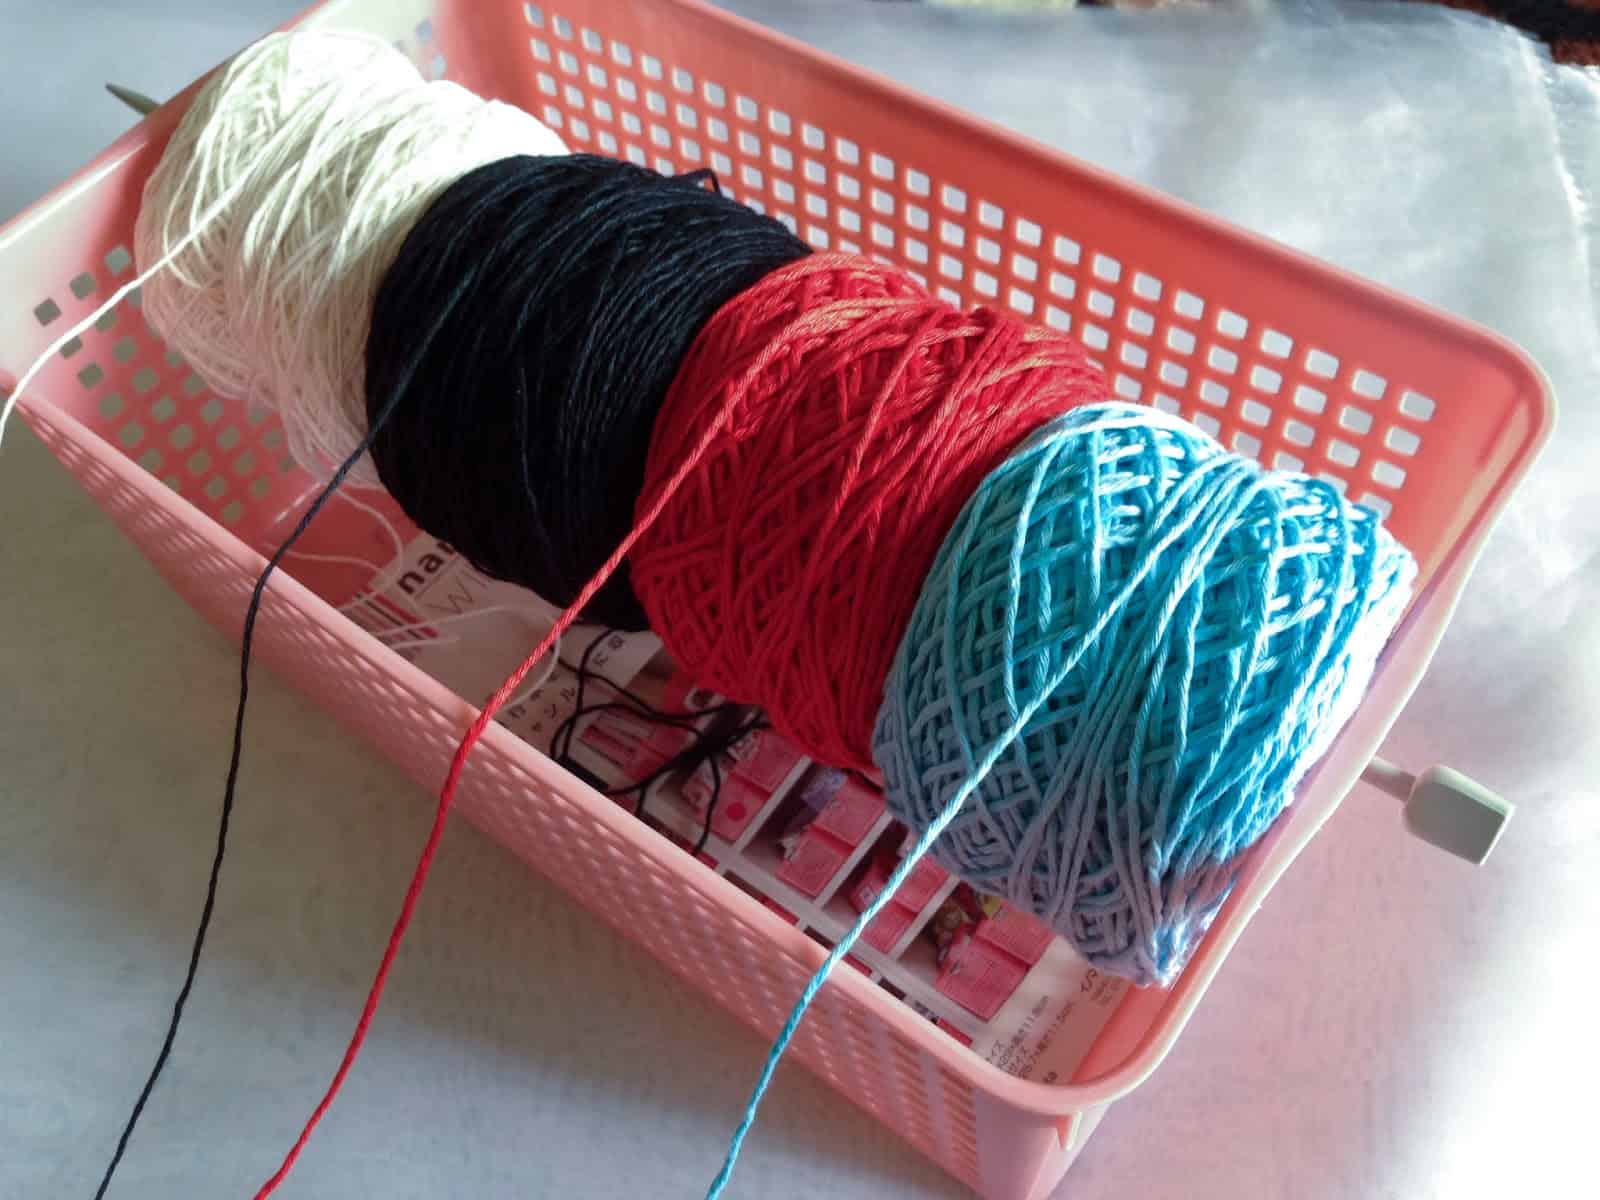 Needle and basket yarn spinner